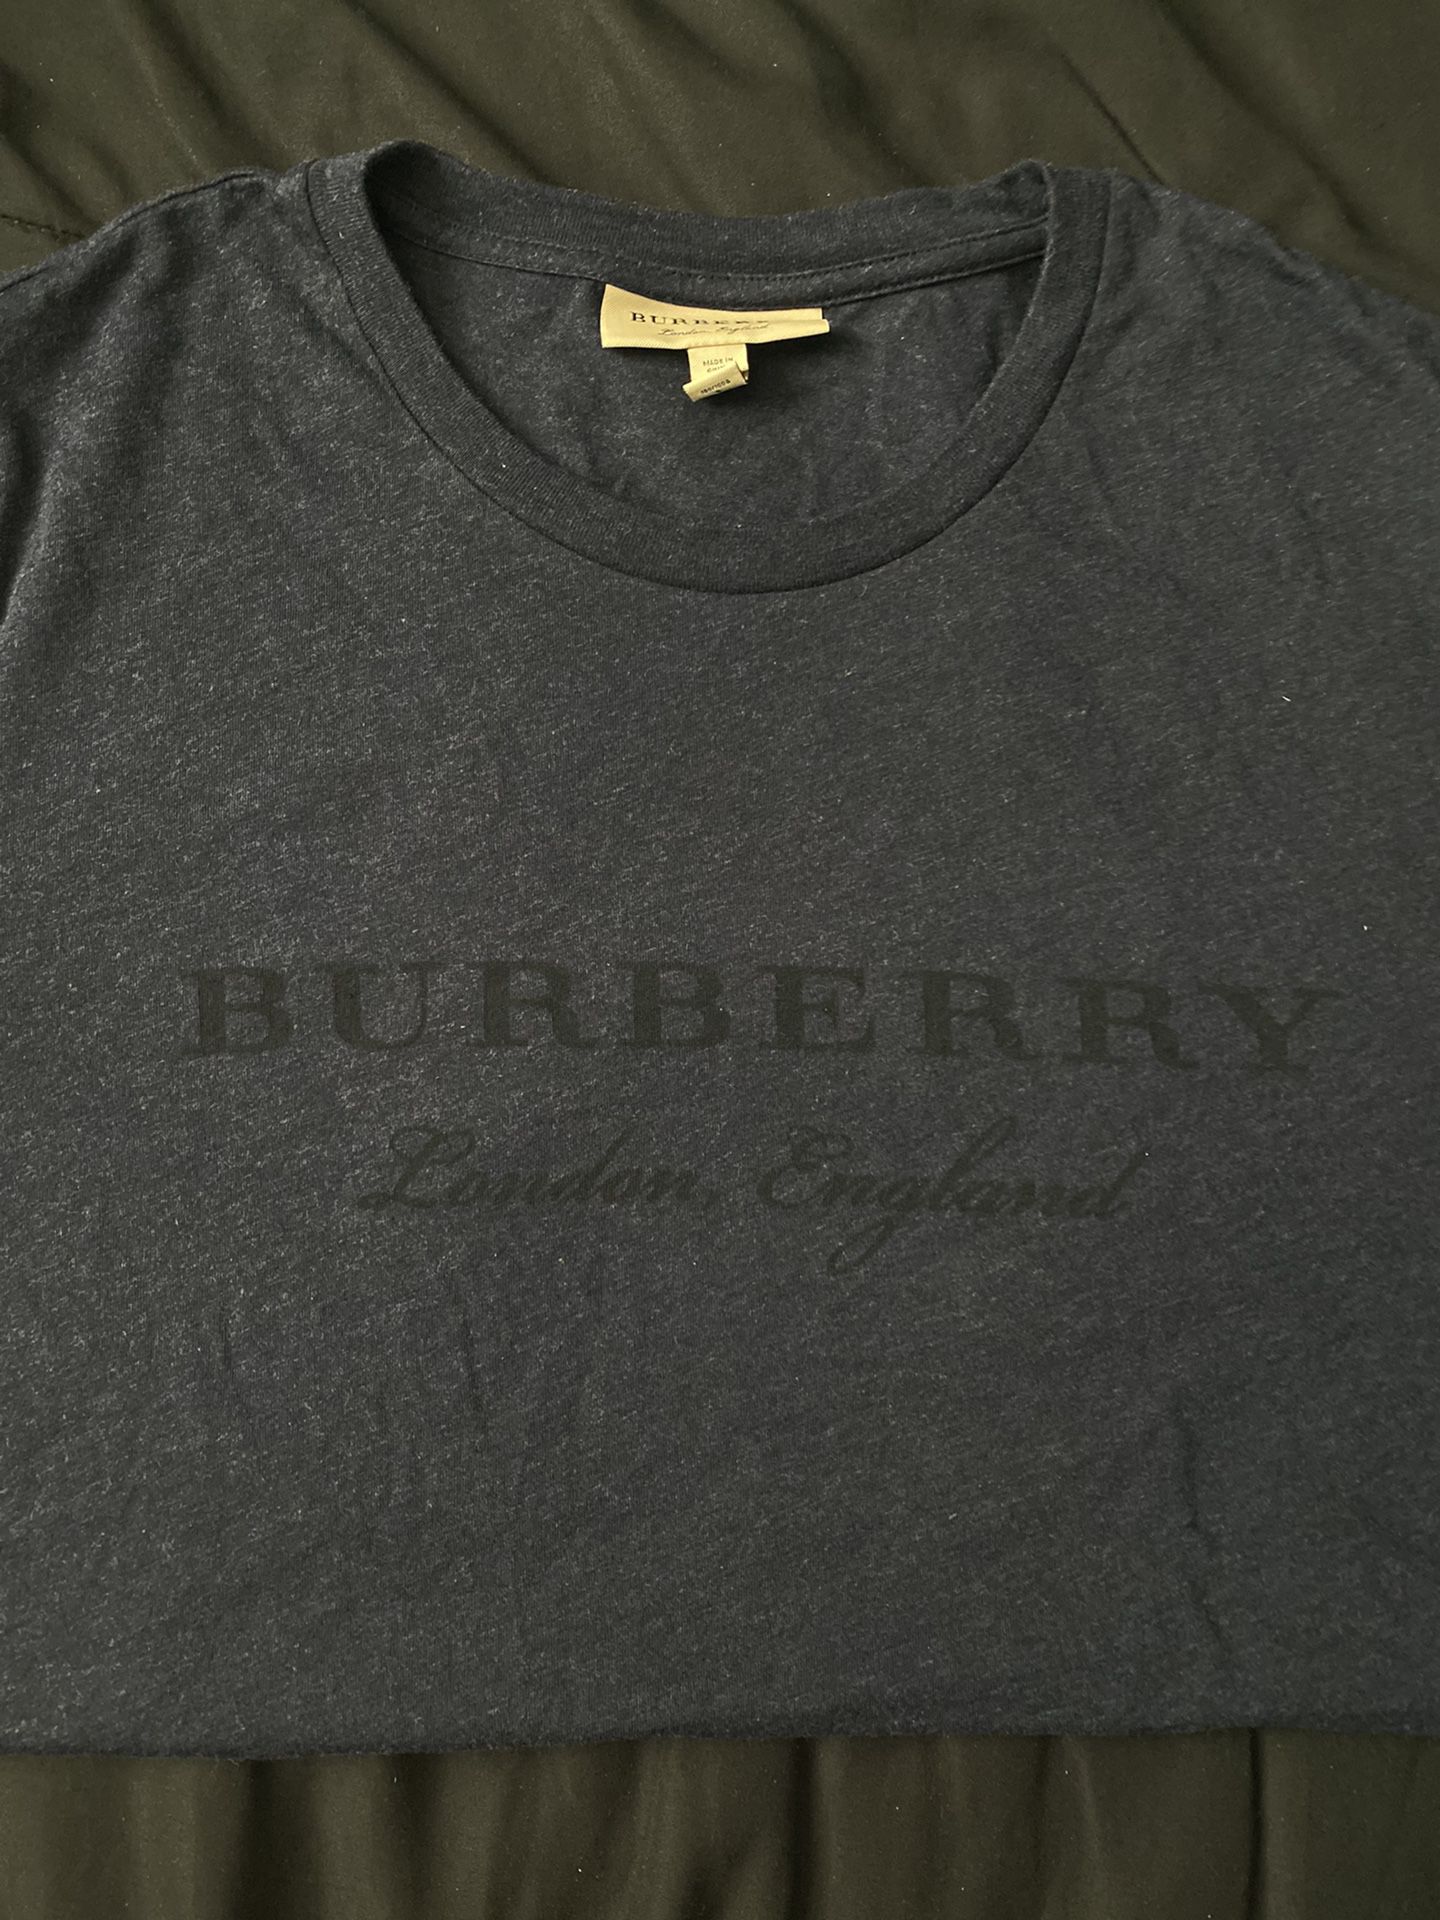 Burberry T Shirt